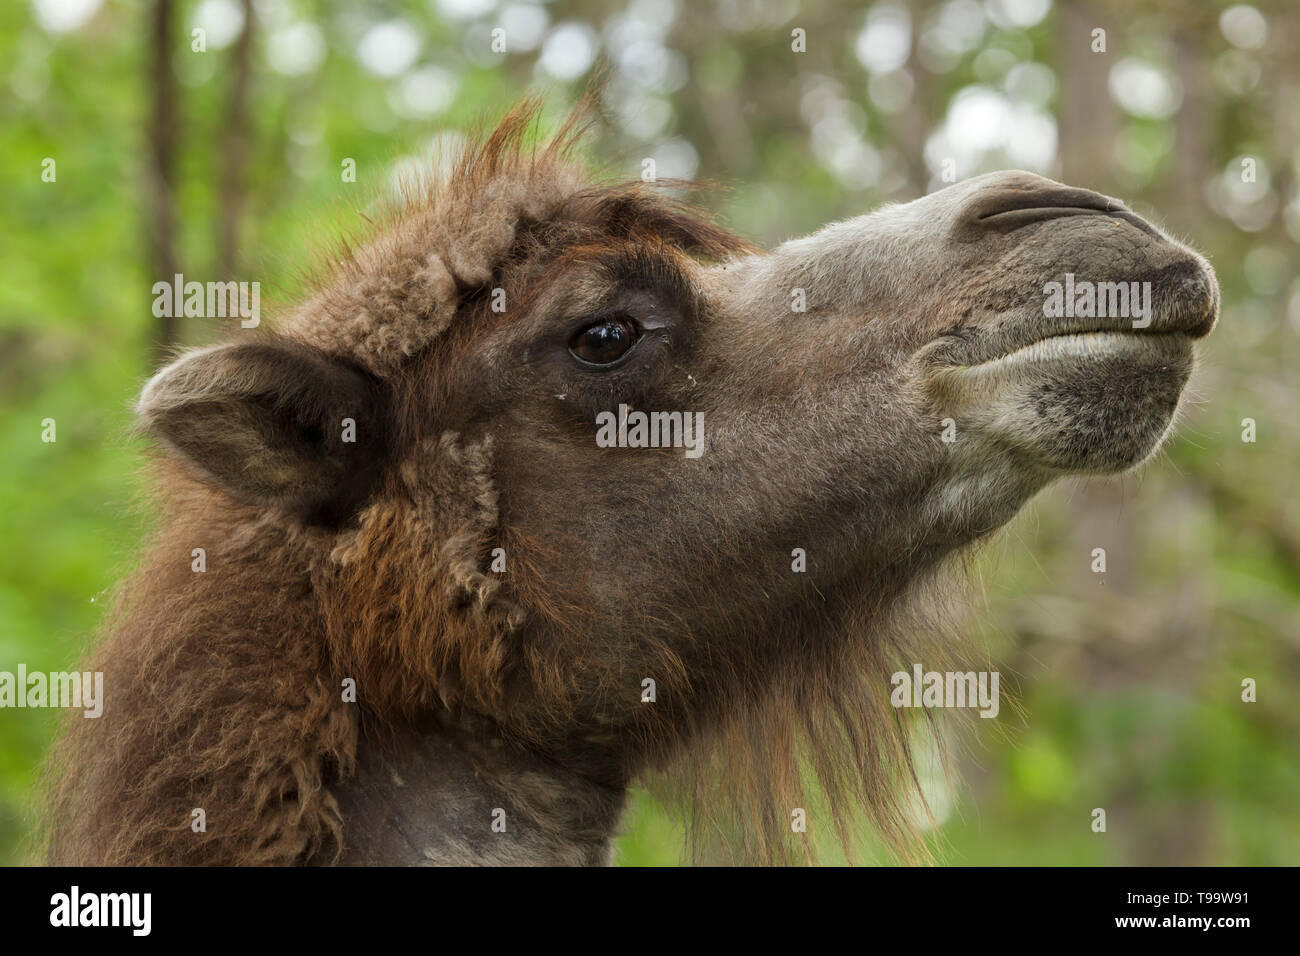 Bactrian camel (Camelus bactrianus). Domesticated animal. Stock Photo